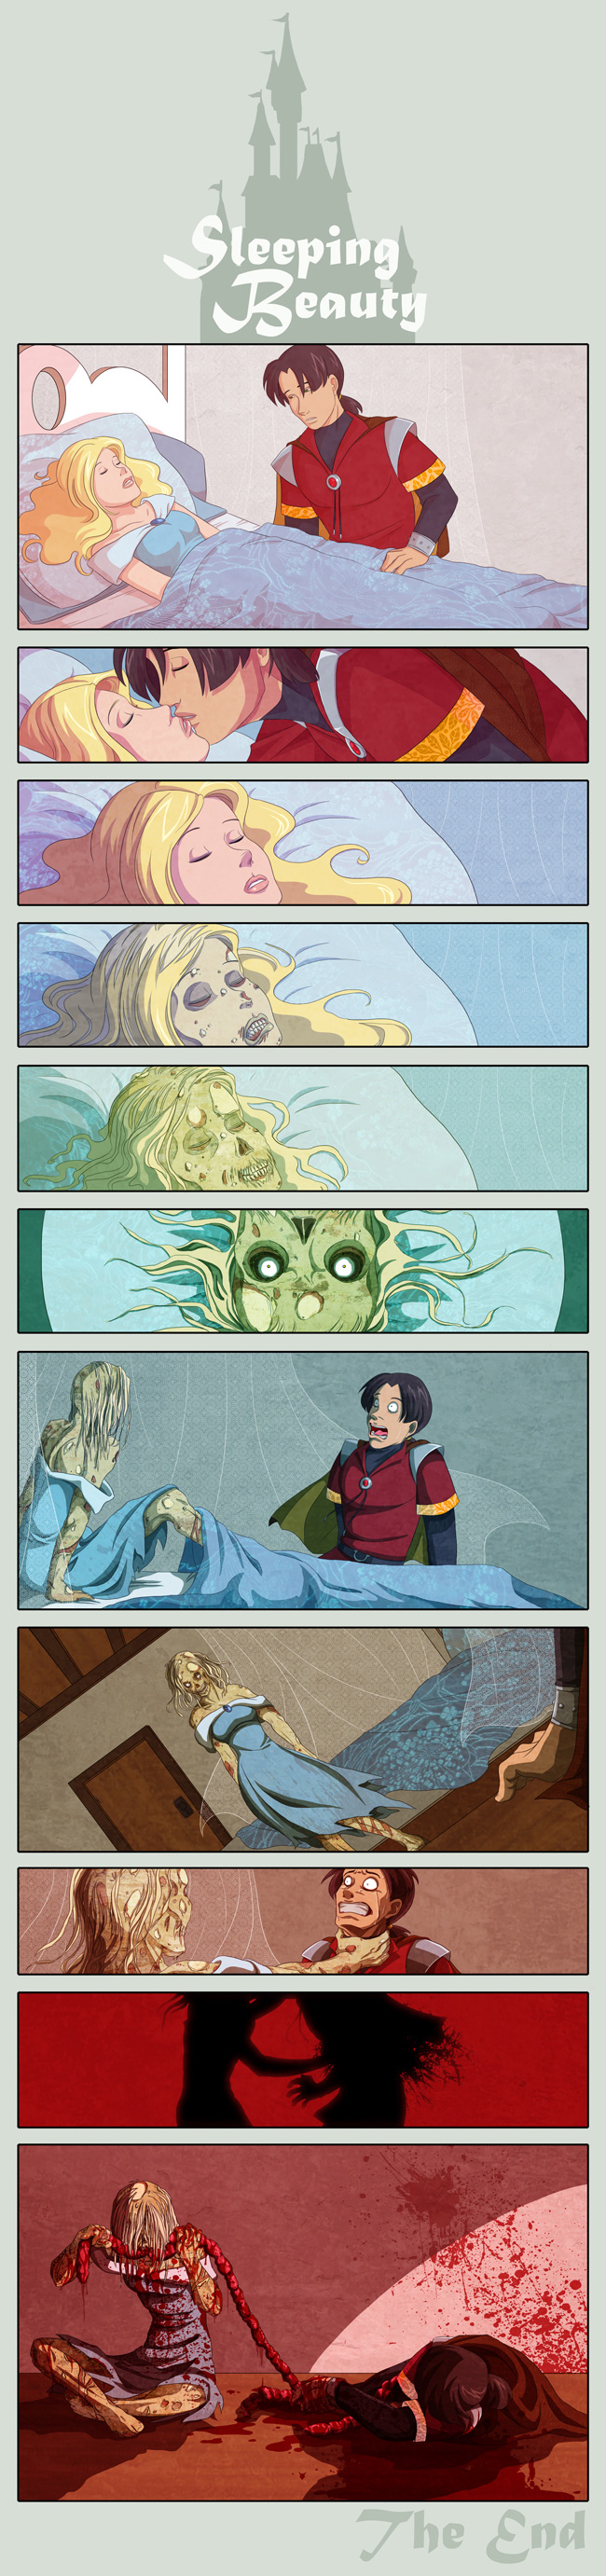 Twisted Sleeping Beauty Comic